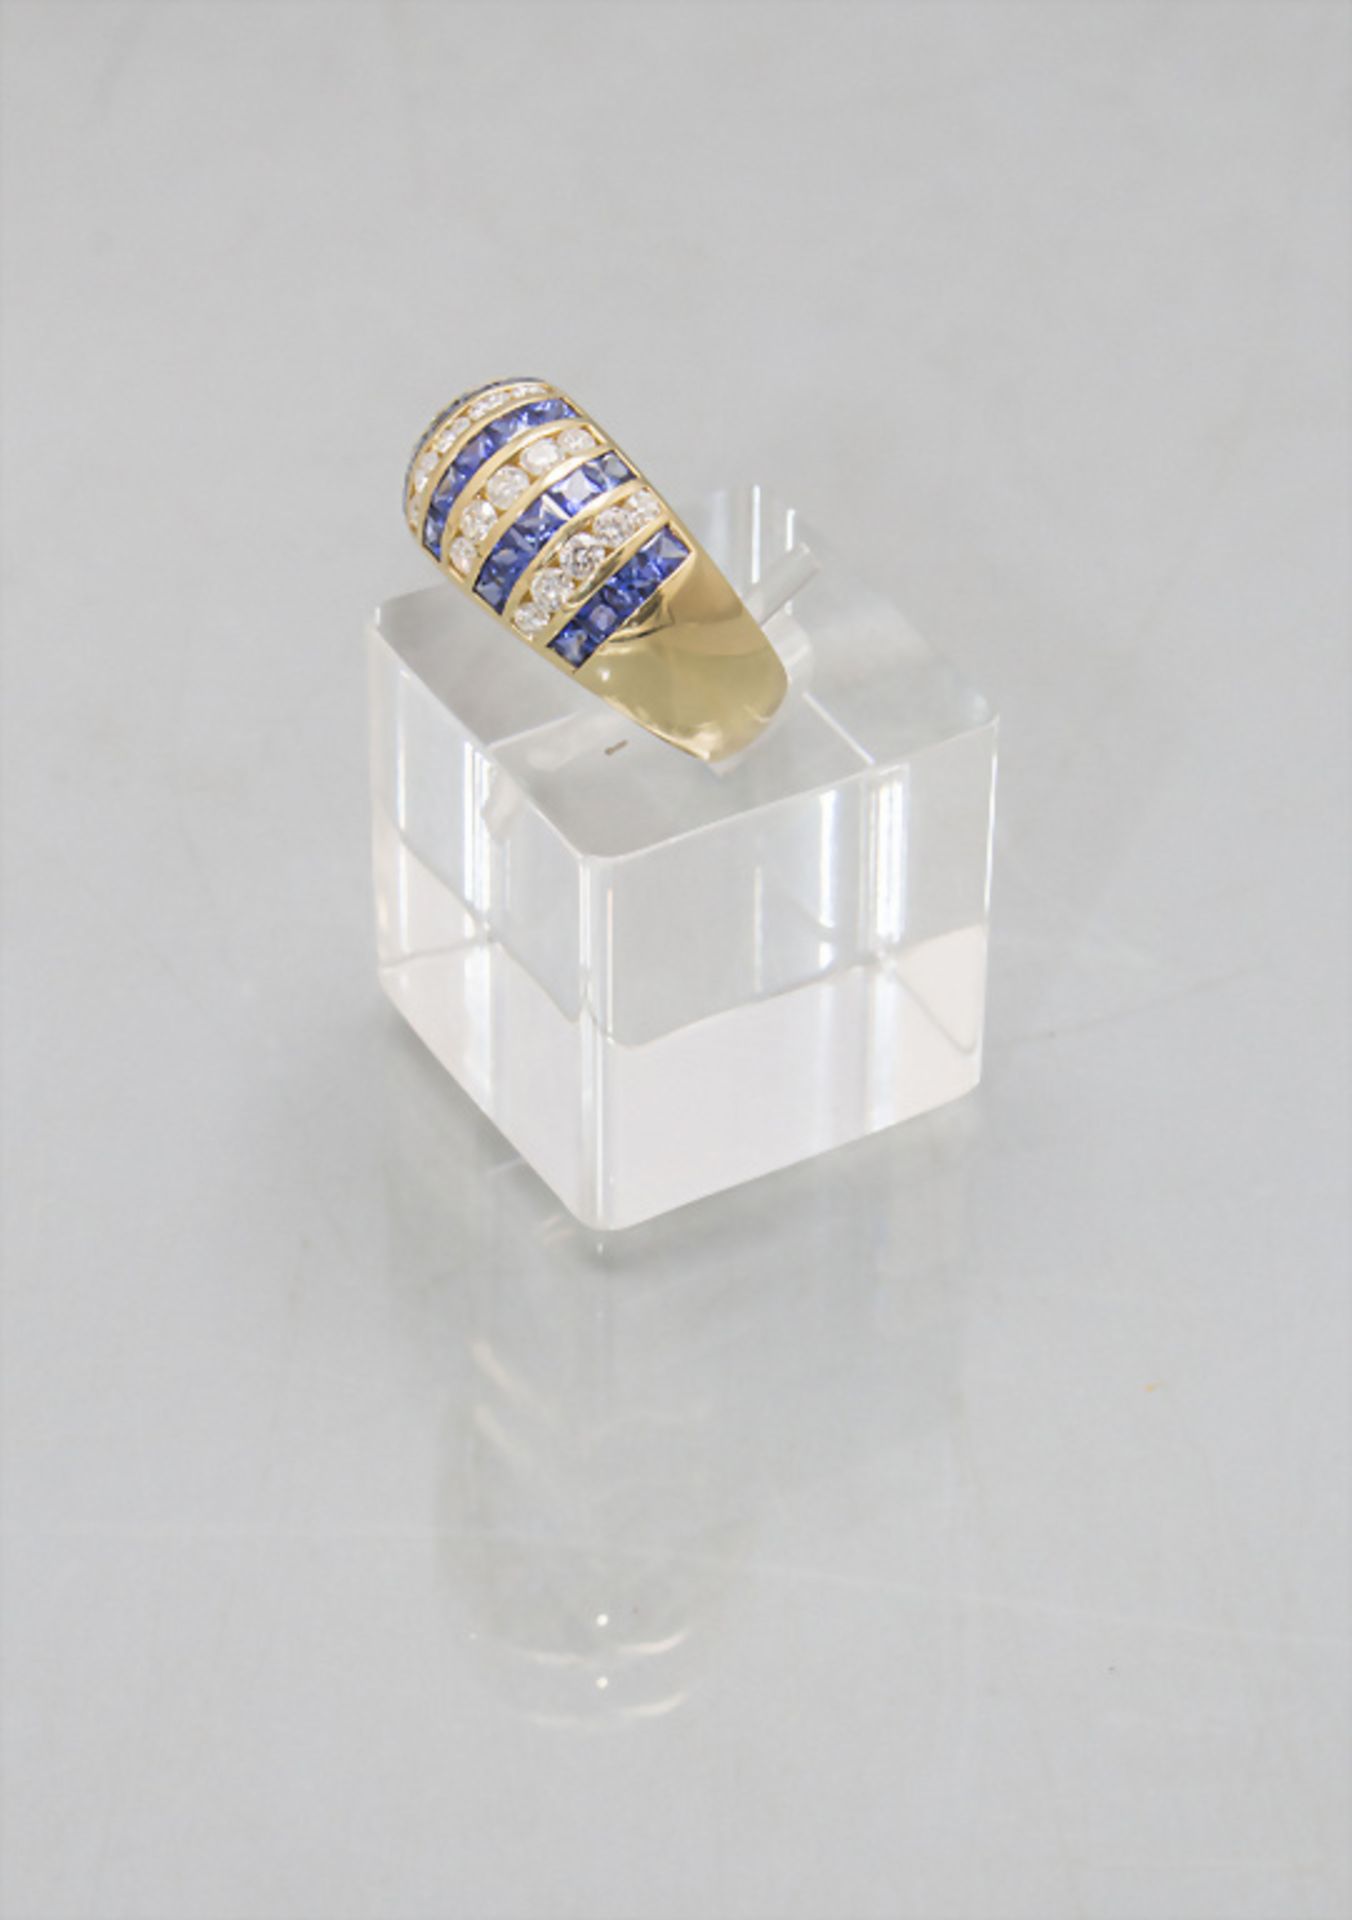 Damenring mit Diamanten und Saphiren / A ladies 18 ct gold ring with diamonds and sapphires - Image 2 of 3